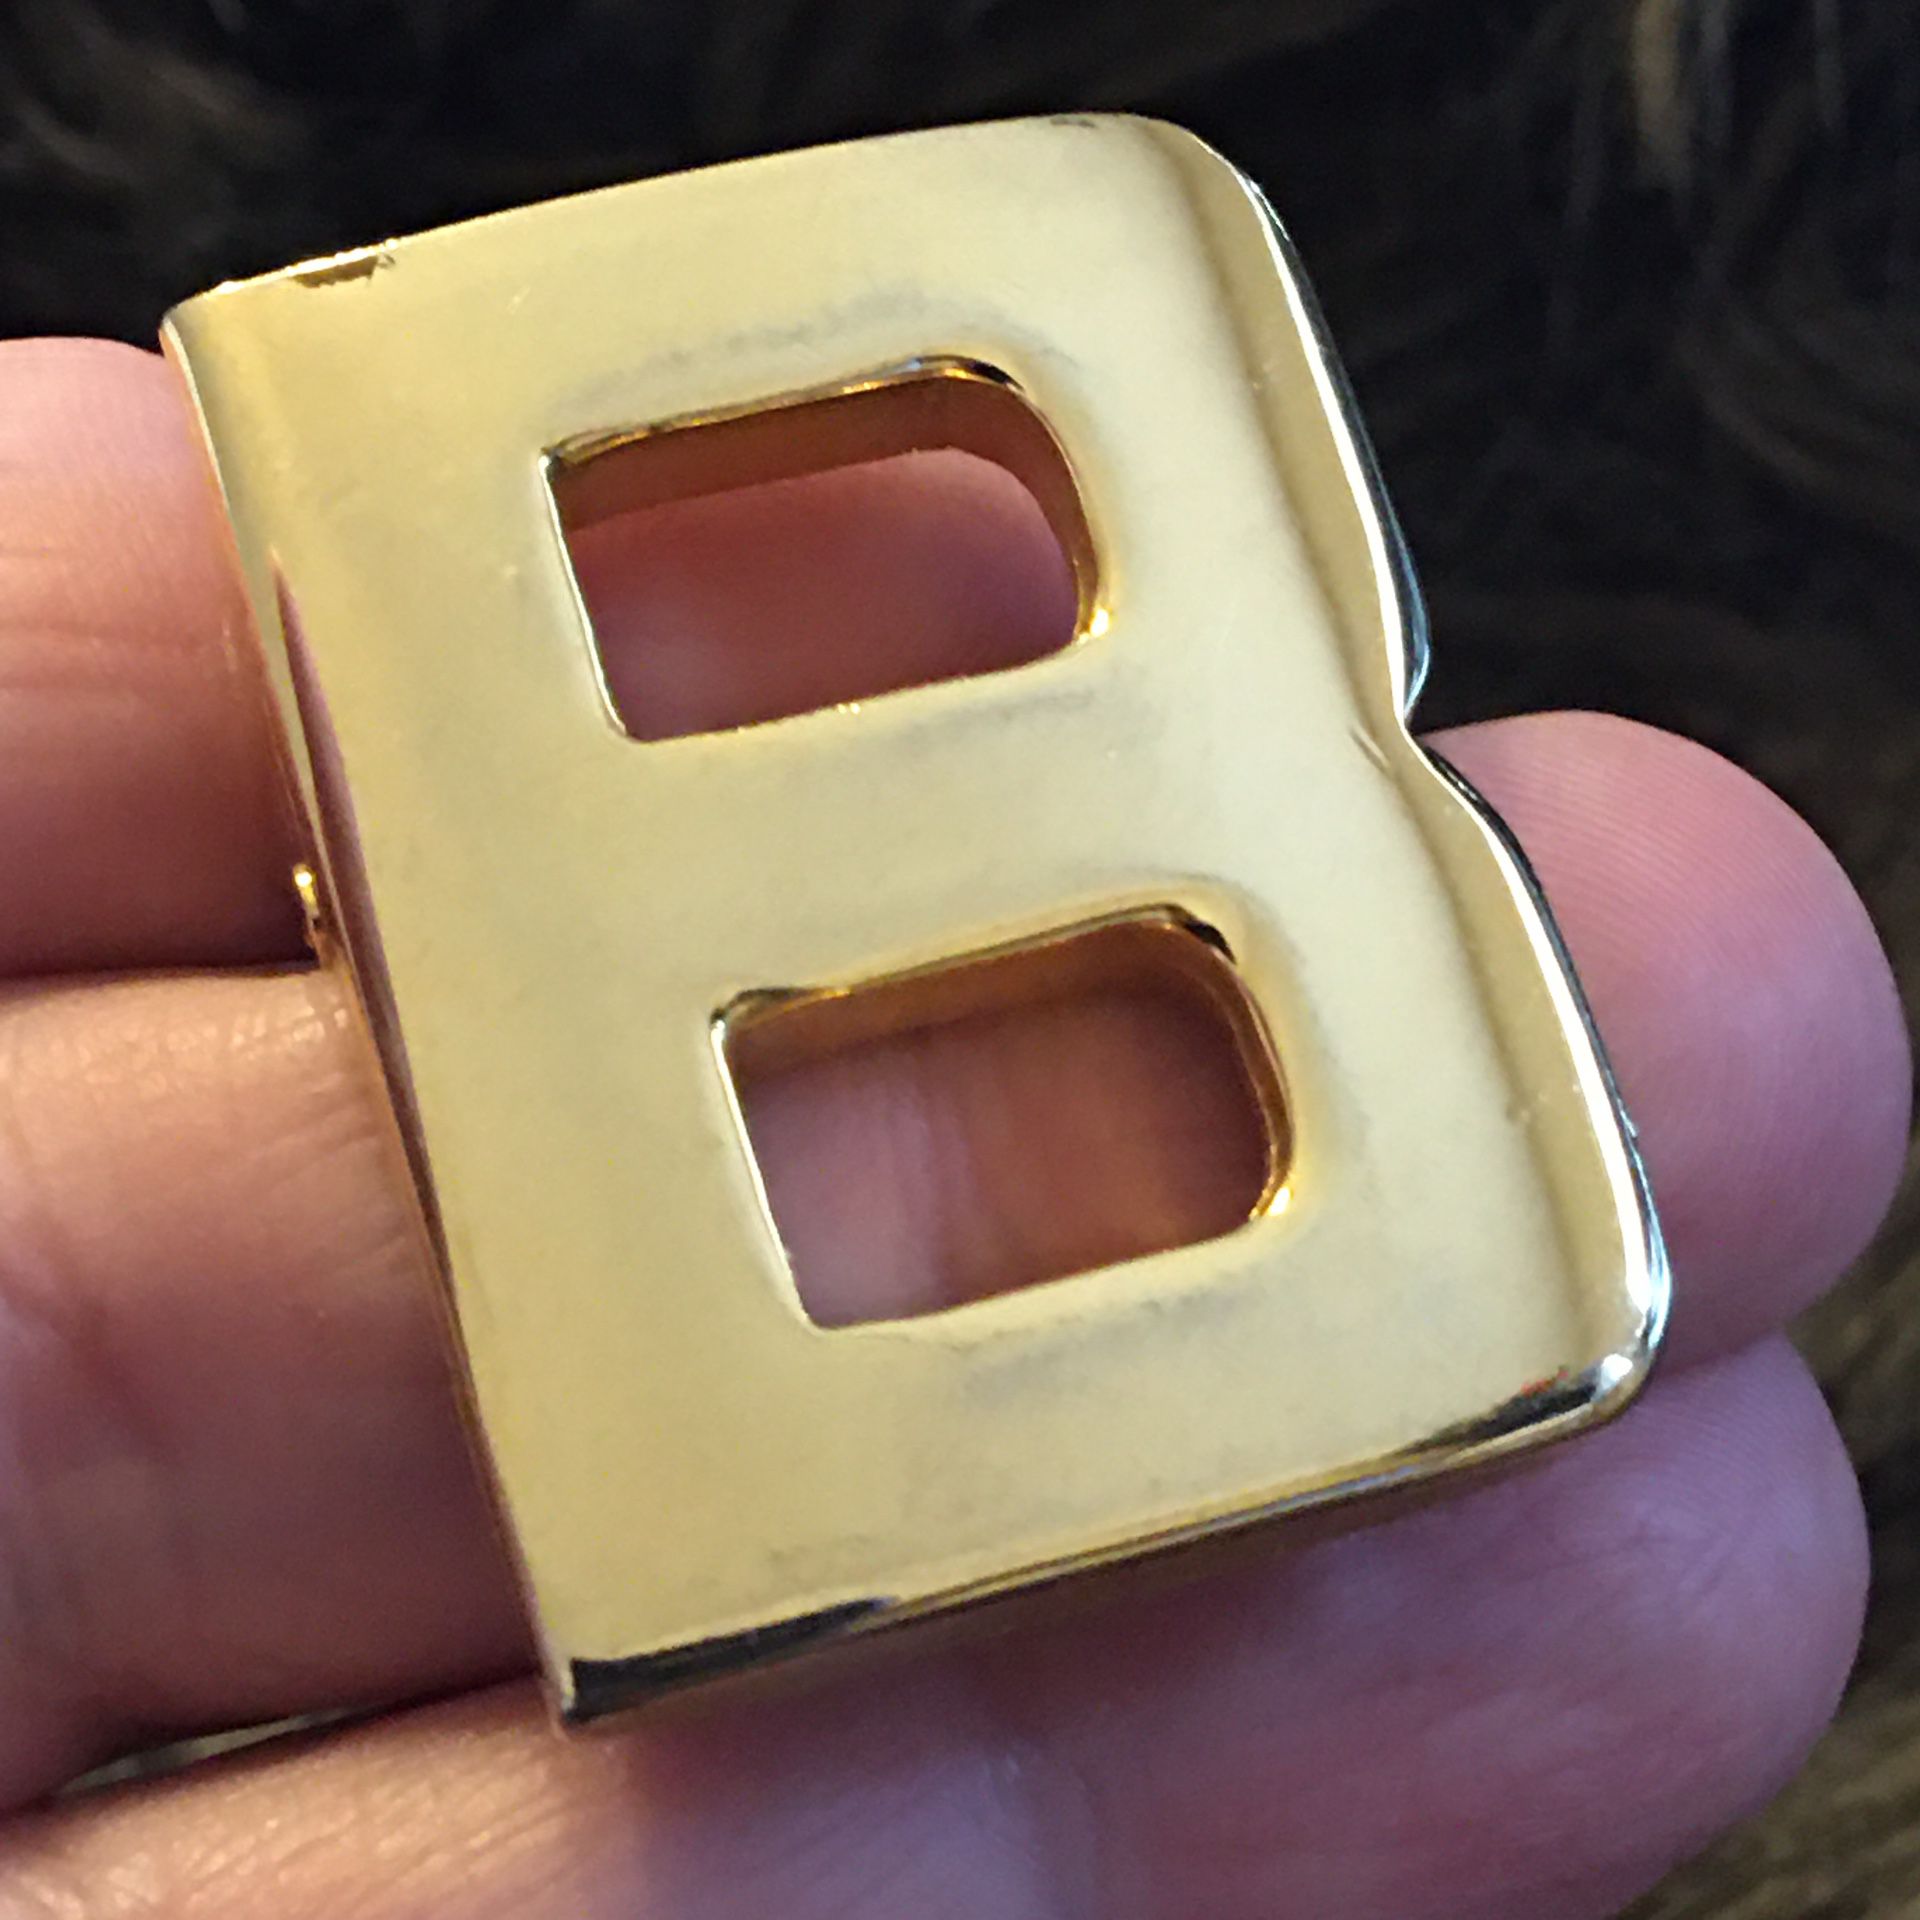 Vintage mirror finish gold tone initial “B” brooch